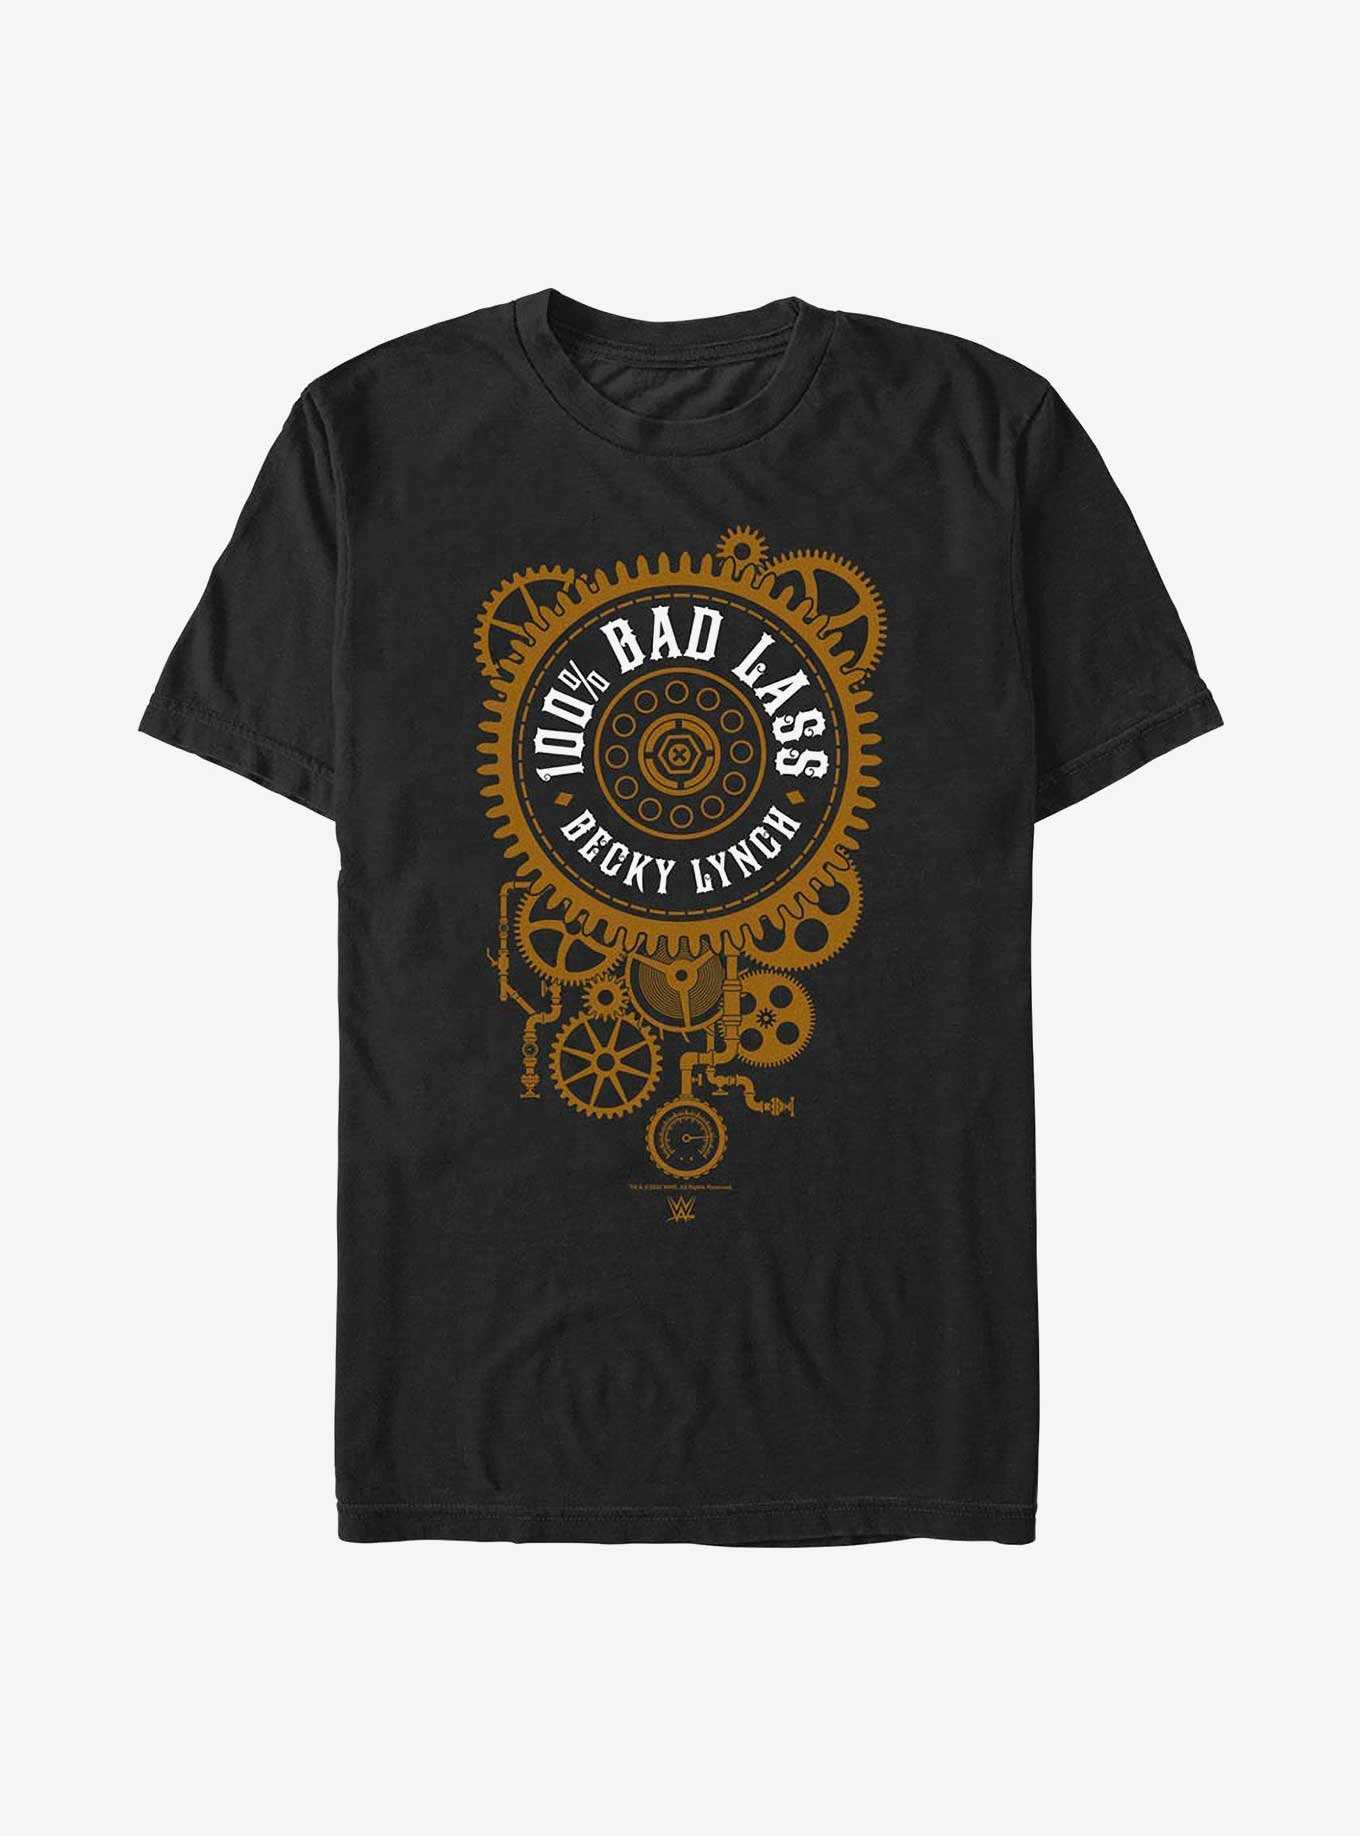 WWE Becky Lynch 100% Bad Lass Logo T-Shirt, , hi-res